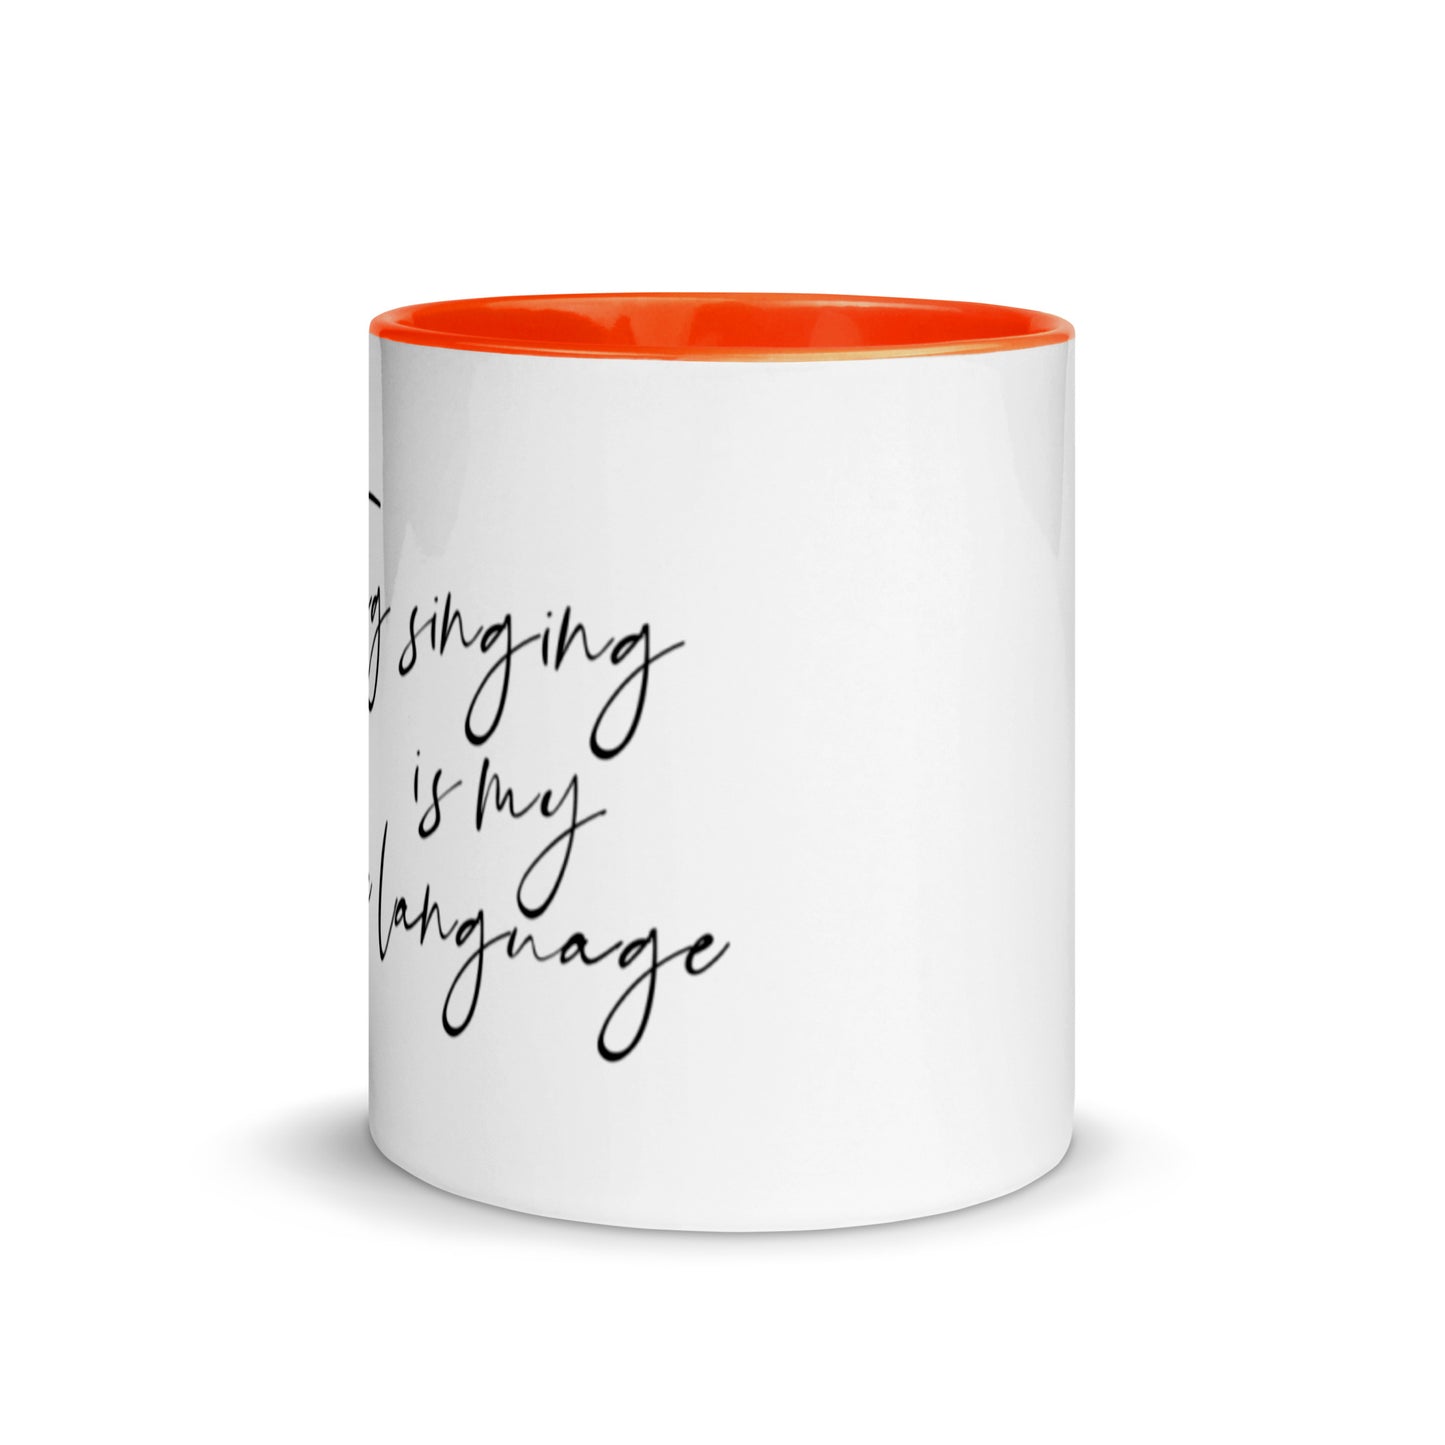 Tag singing is my love language - Mug